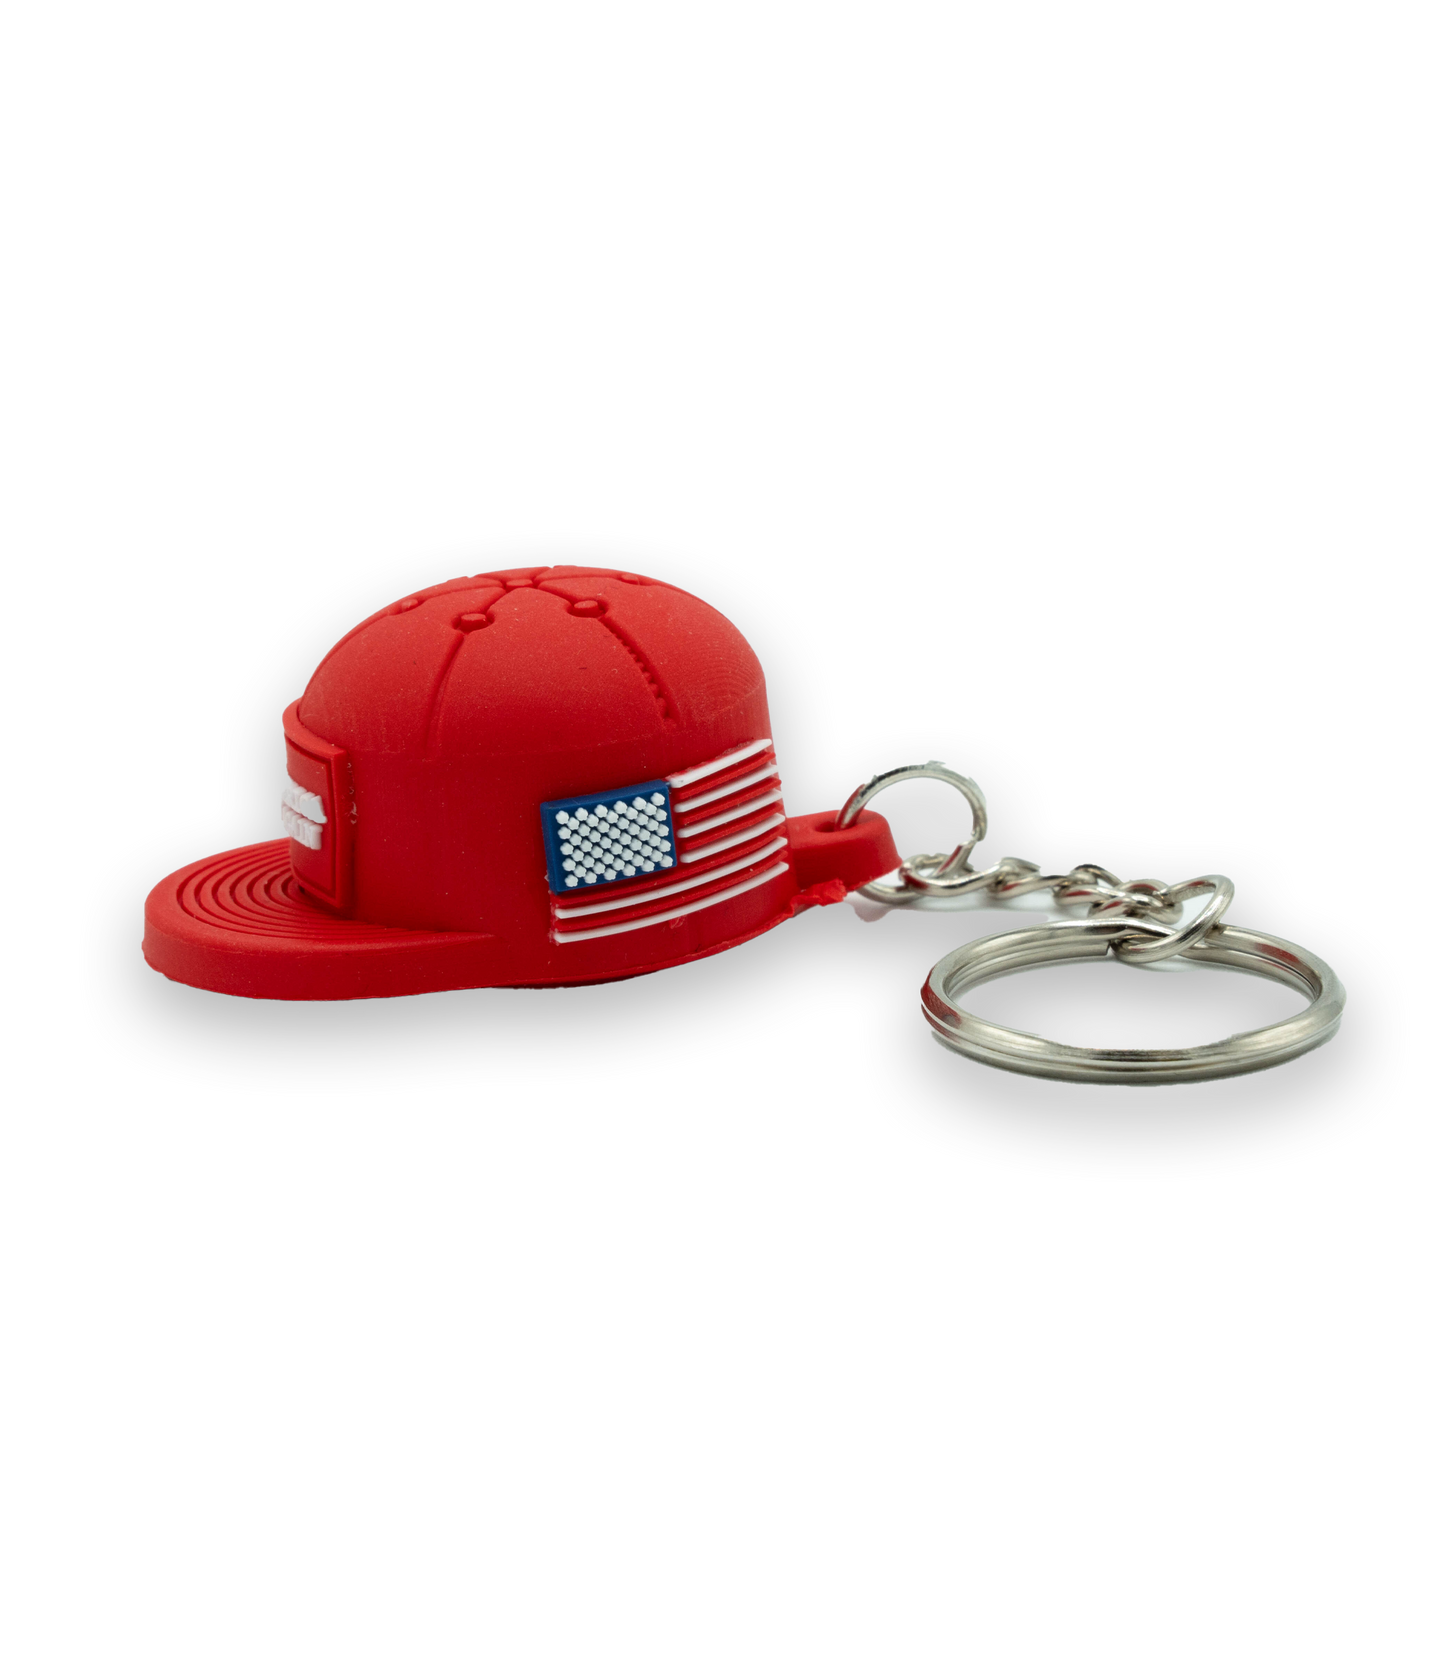 MAGA Hat "Limited Edition" Keychain